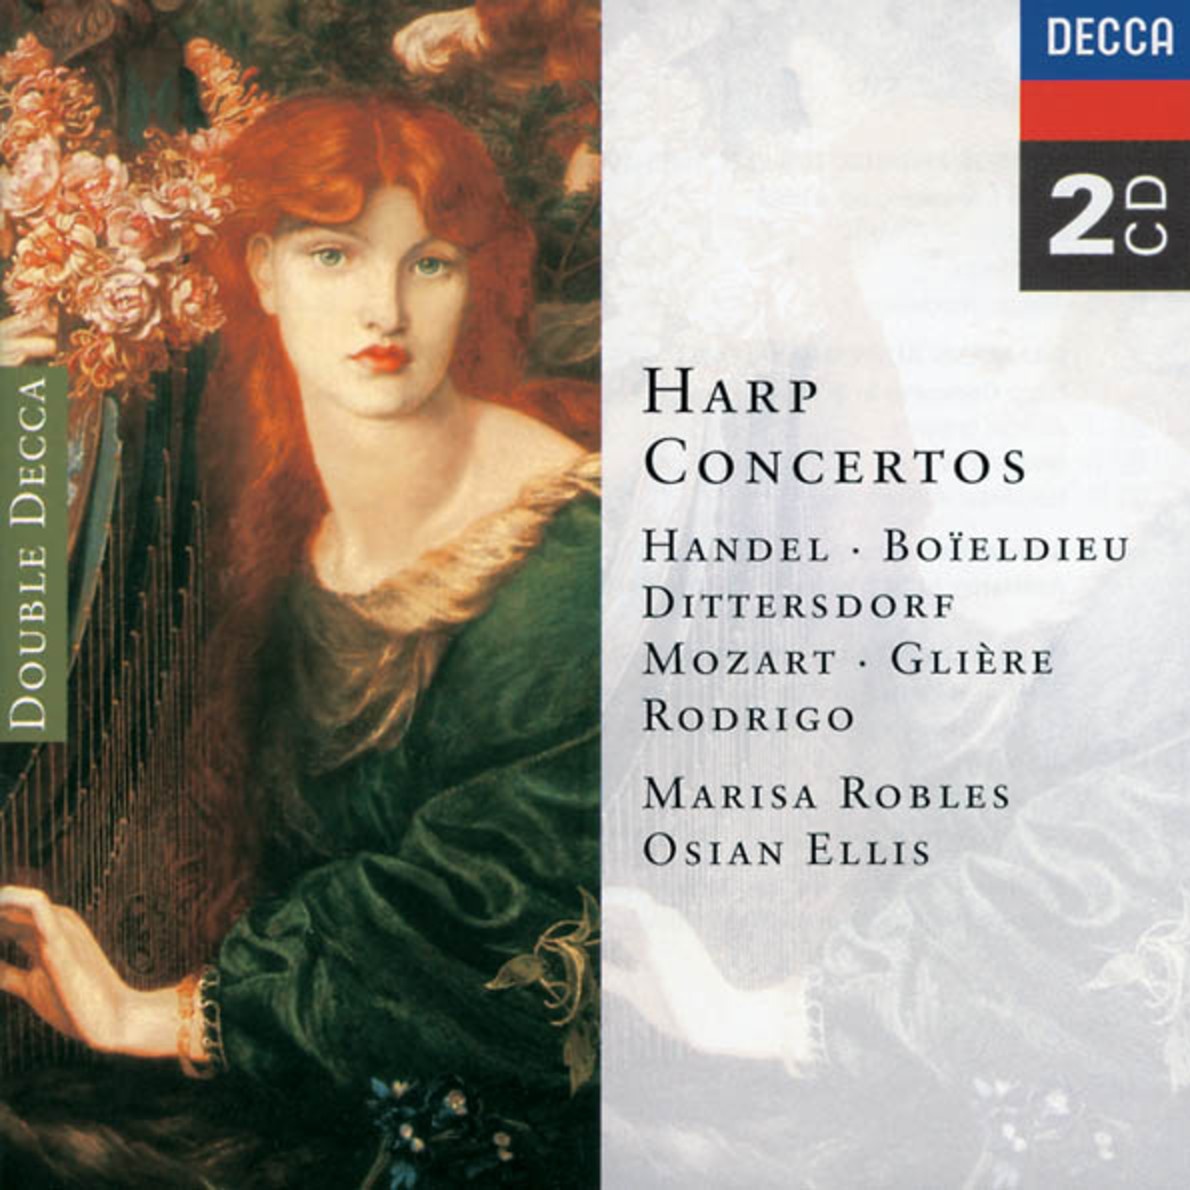 Harp Concerto in B flat, Op.4, No.6, HWV 294:1. Andante allegro